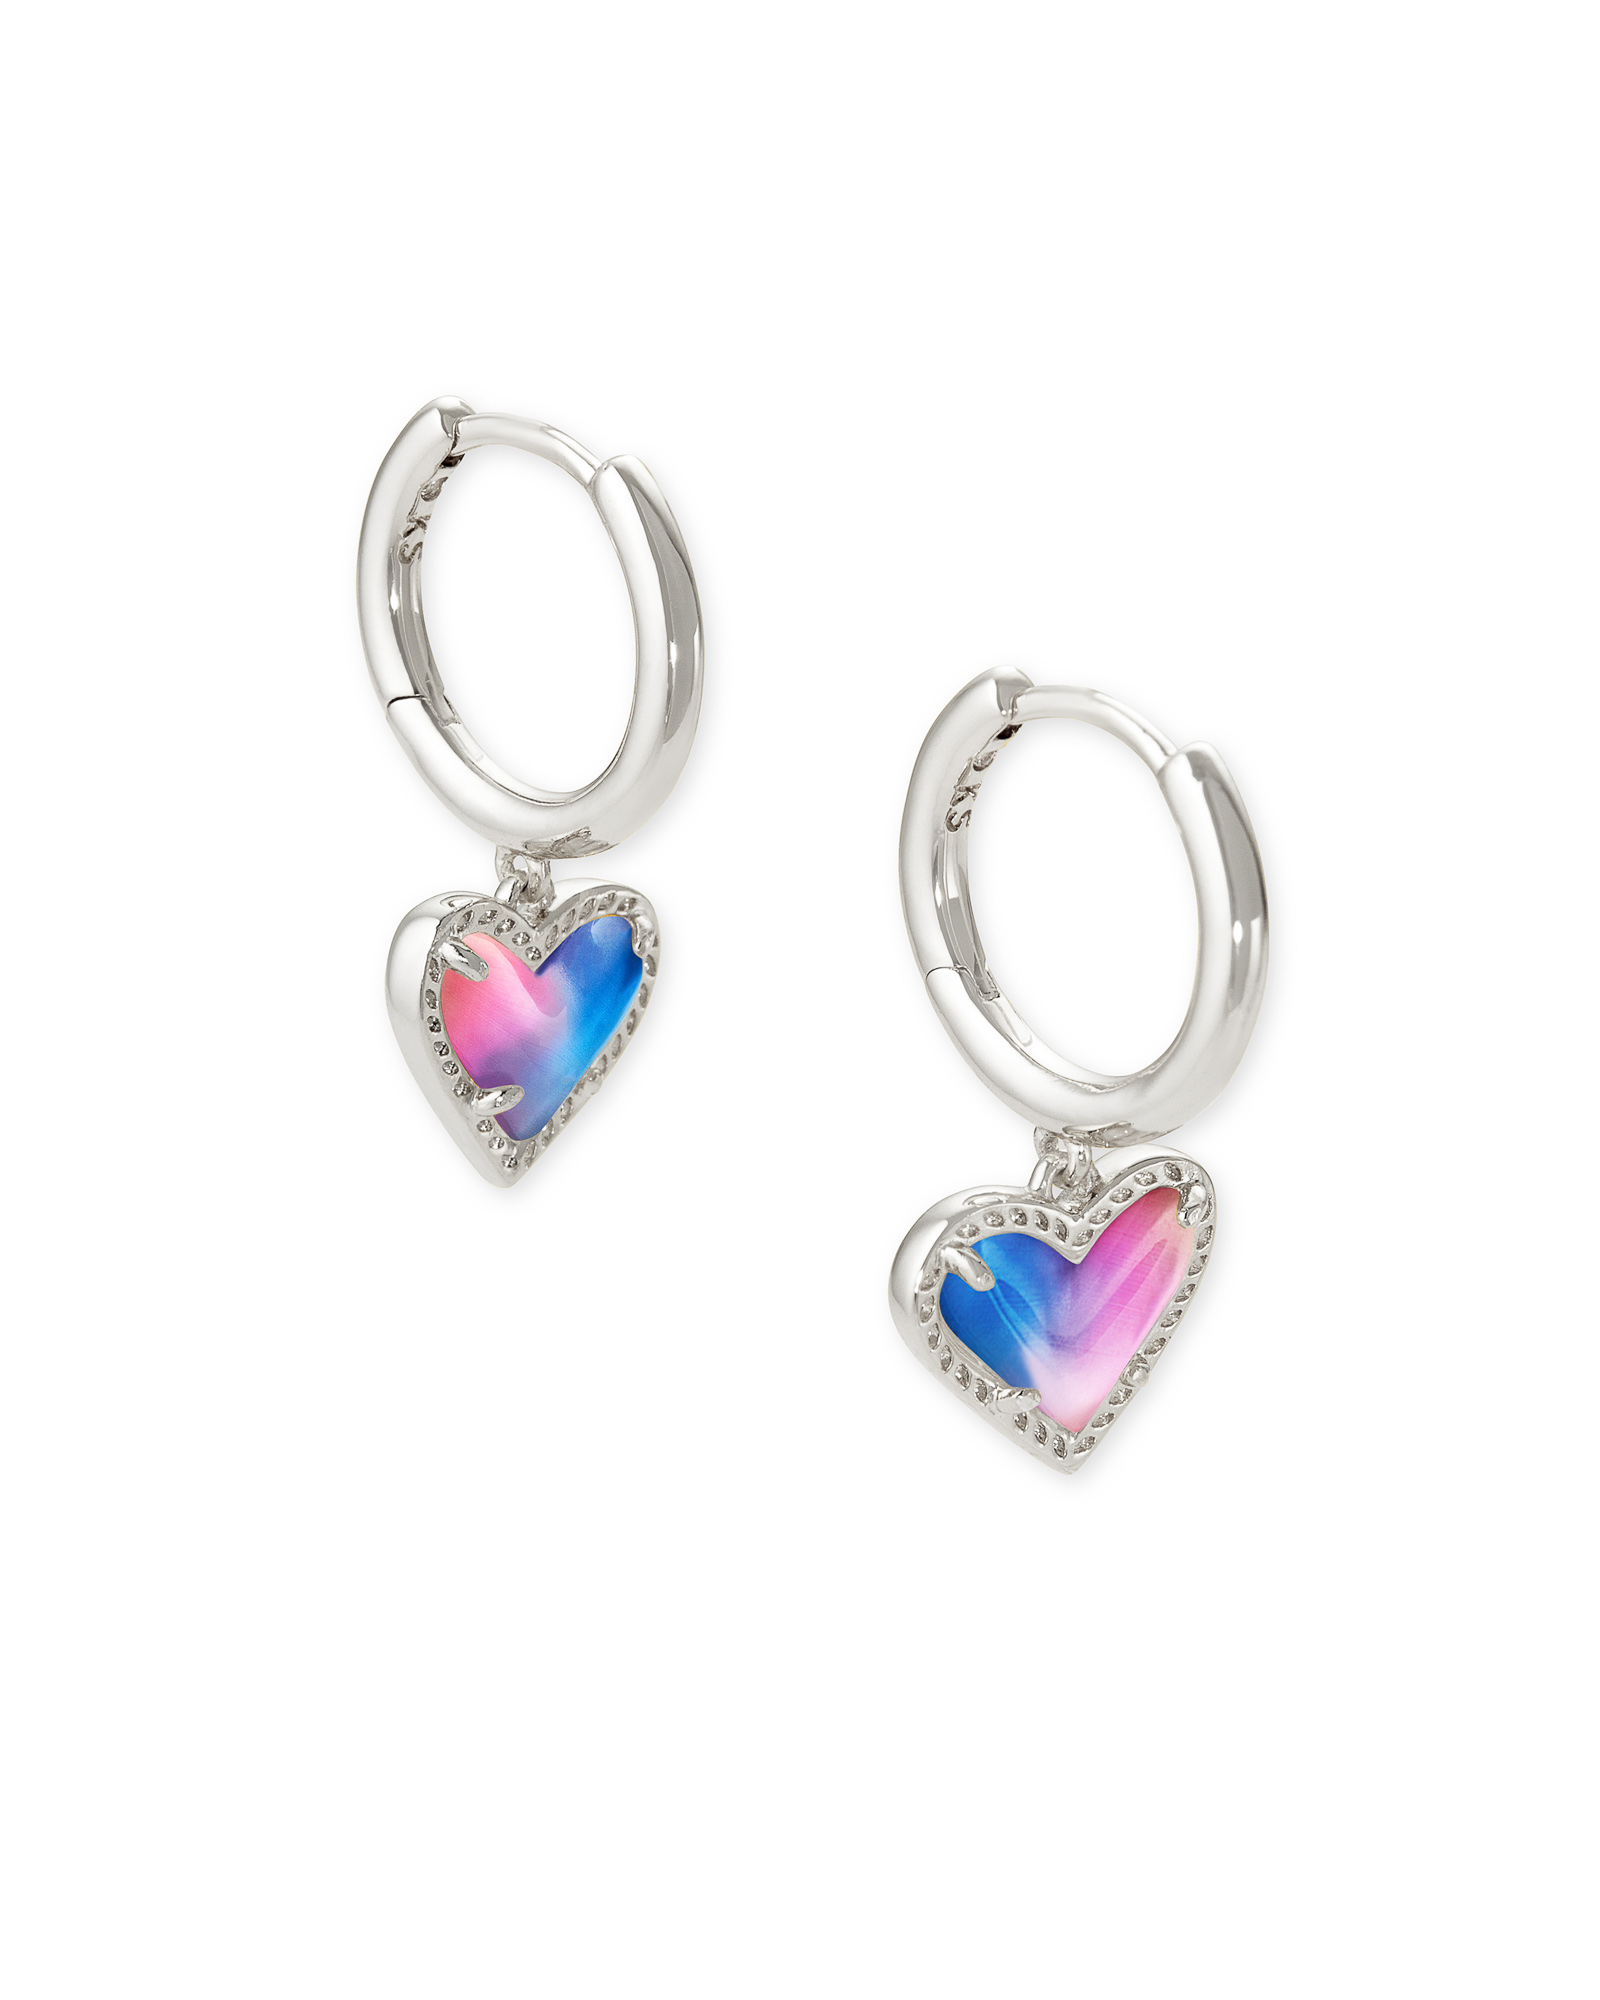 Ari Heart Silver Huggie Earrings in Watercolor Illusion | Kendra Scott